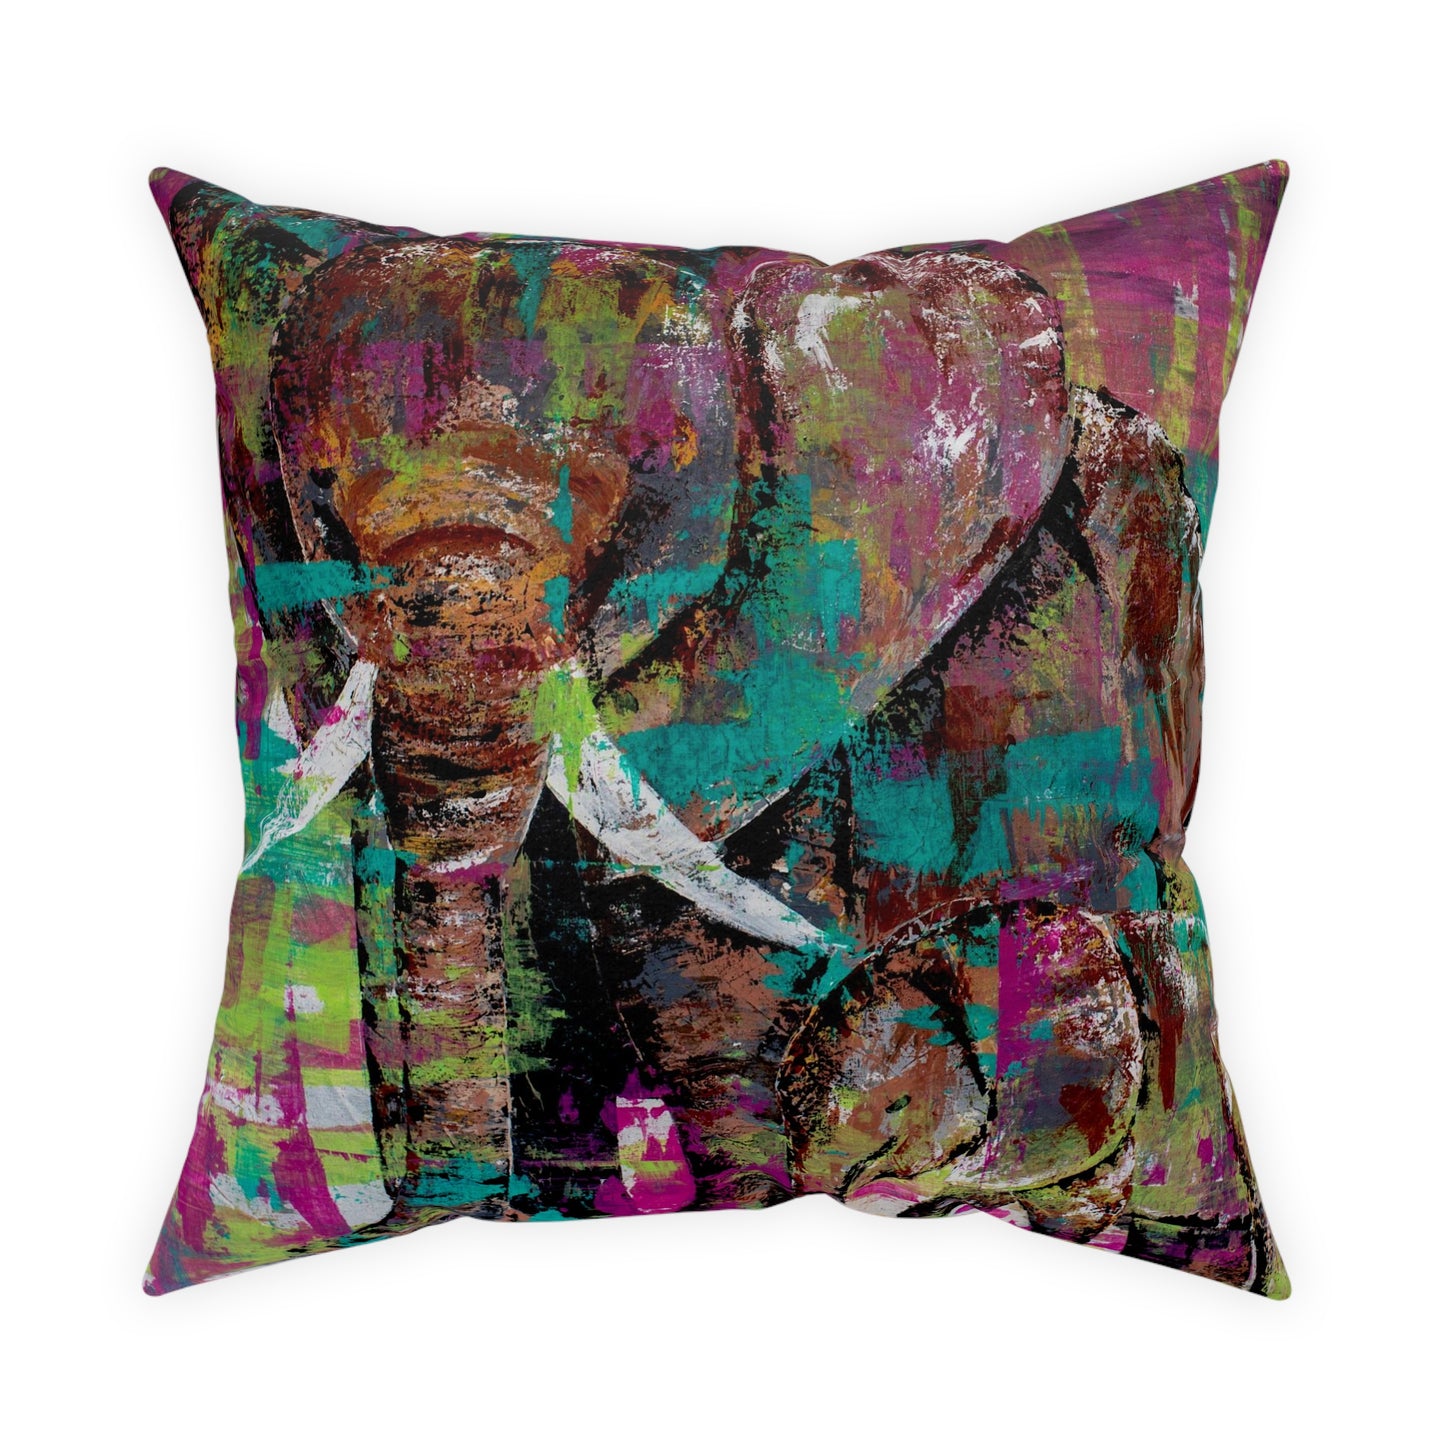 Pure Love - Pink Throw Pillow - Elephant art Throw pillow - Decorative Pillow for home